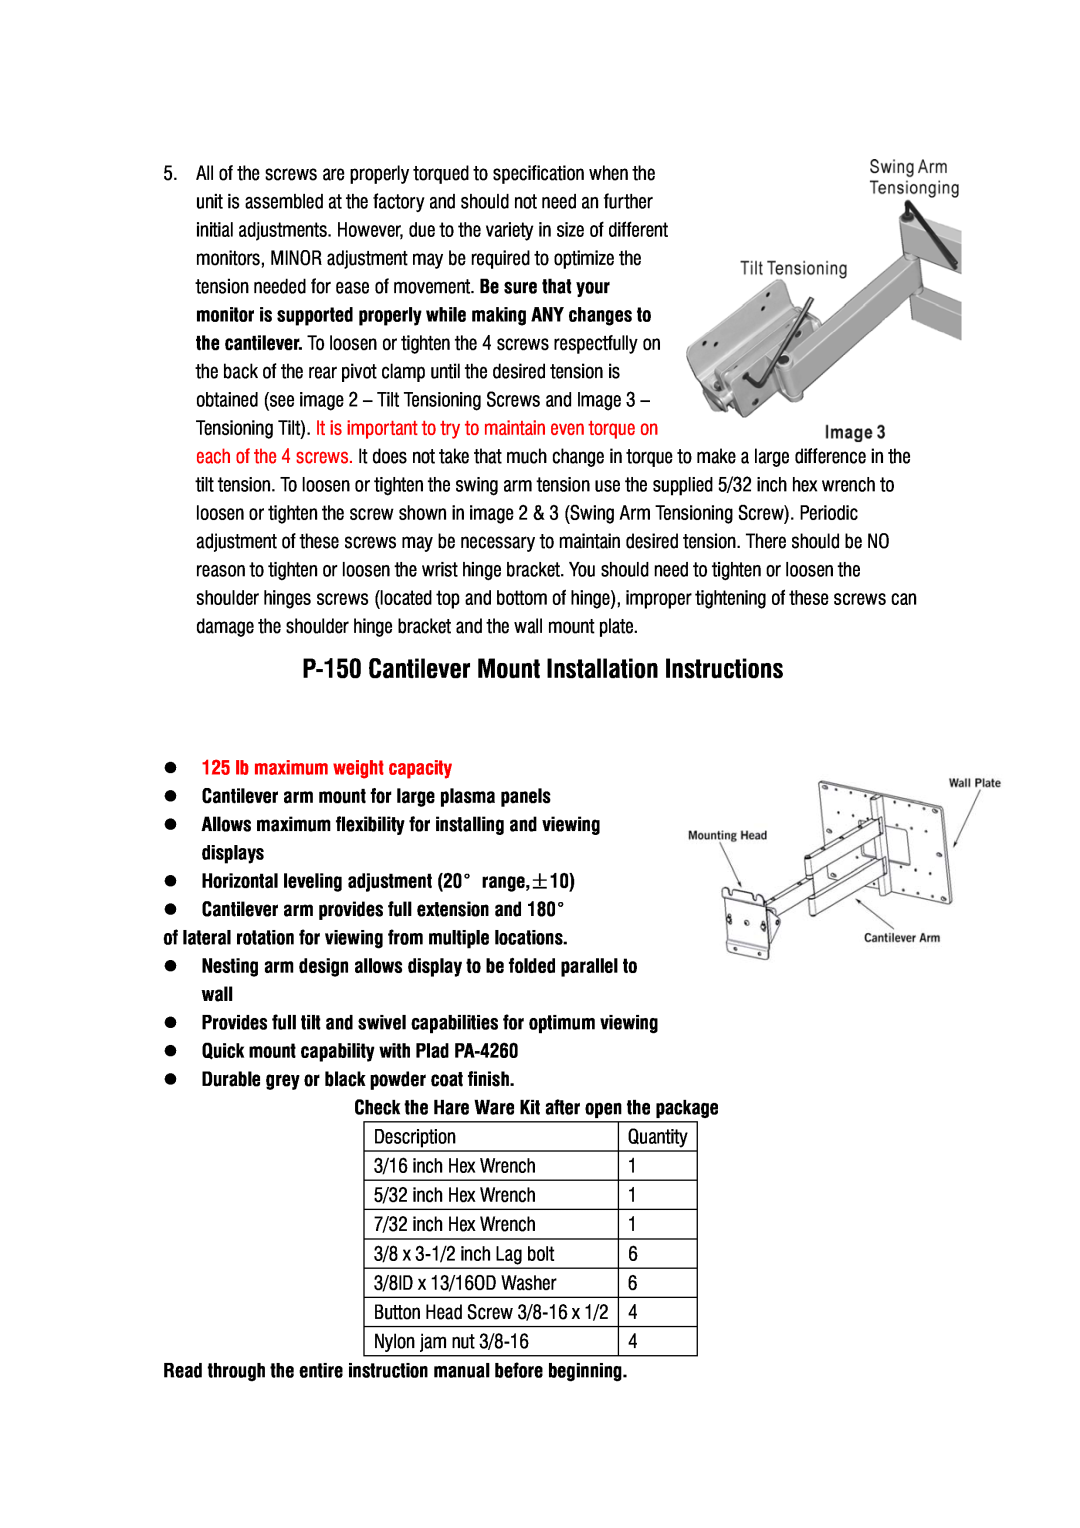 DCS Flat Panel TV warranty P-150 Cantilever Mount Installation Instructions, z 125 lb maximum weight capacity 